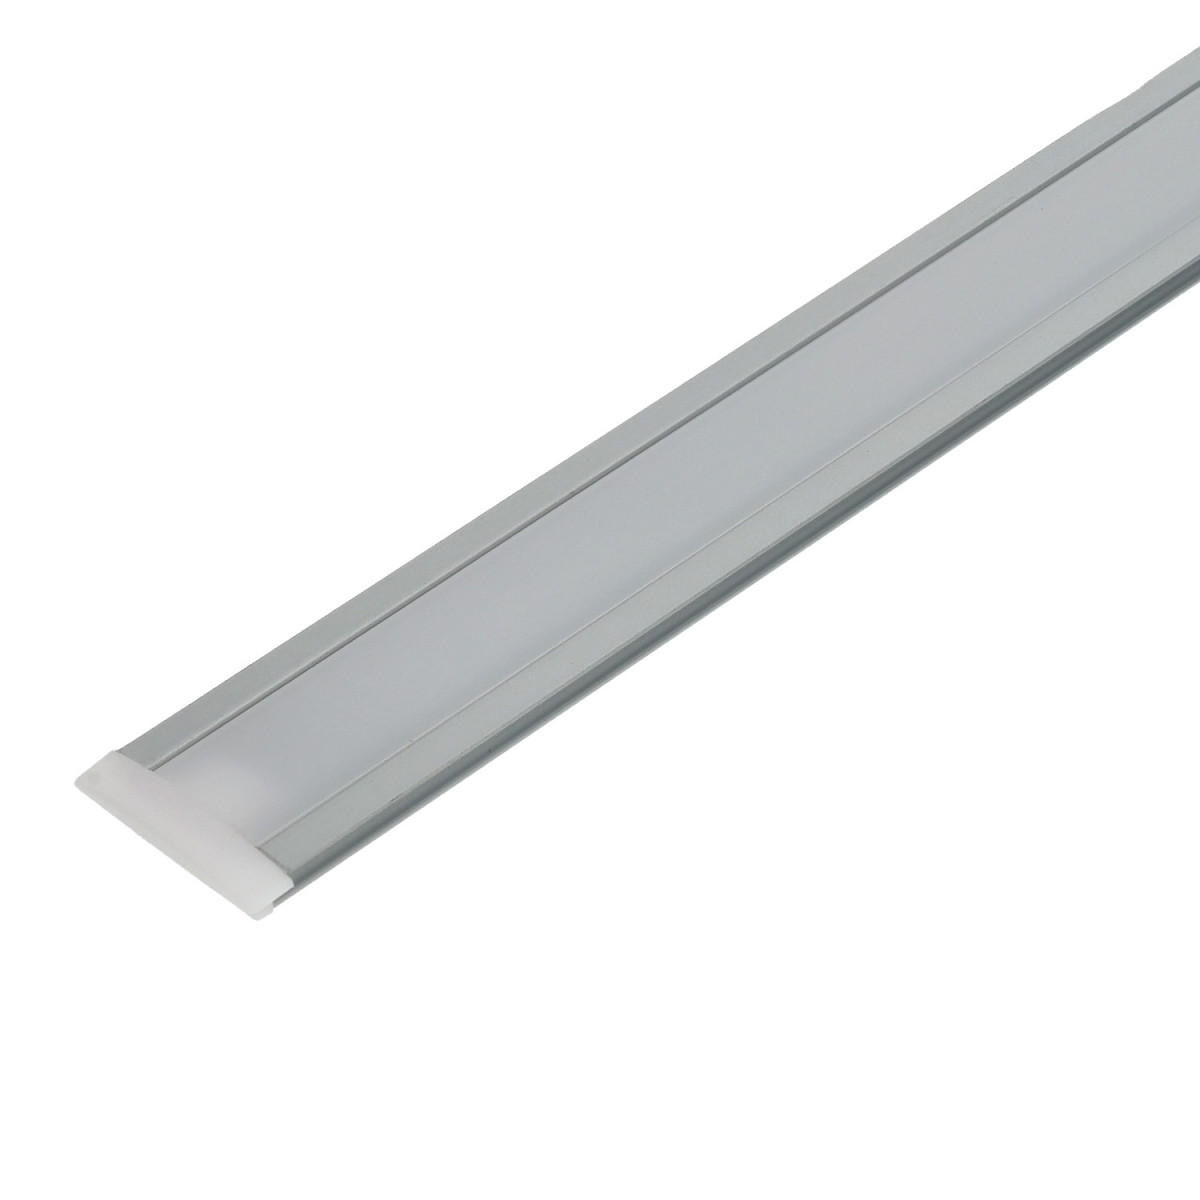 Profile for 2 m LED Strips - Rectangular, Aluminium, Clips